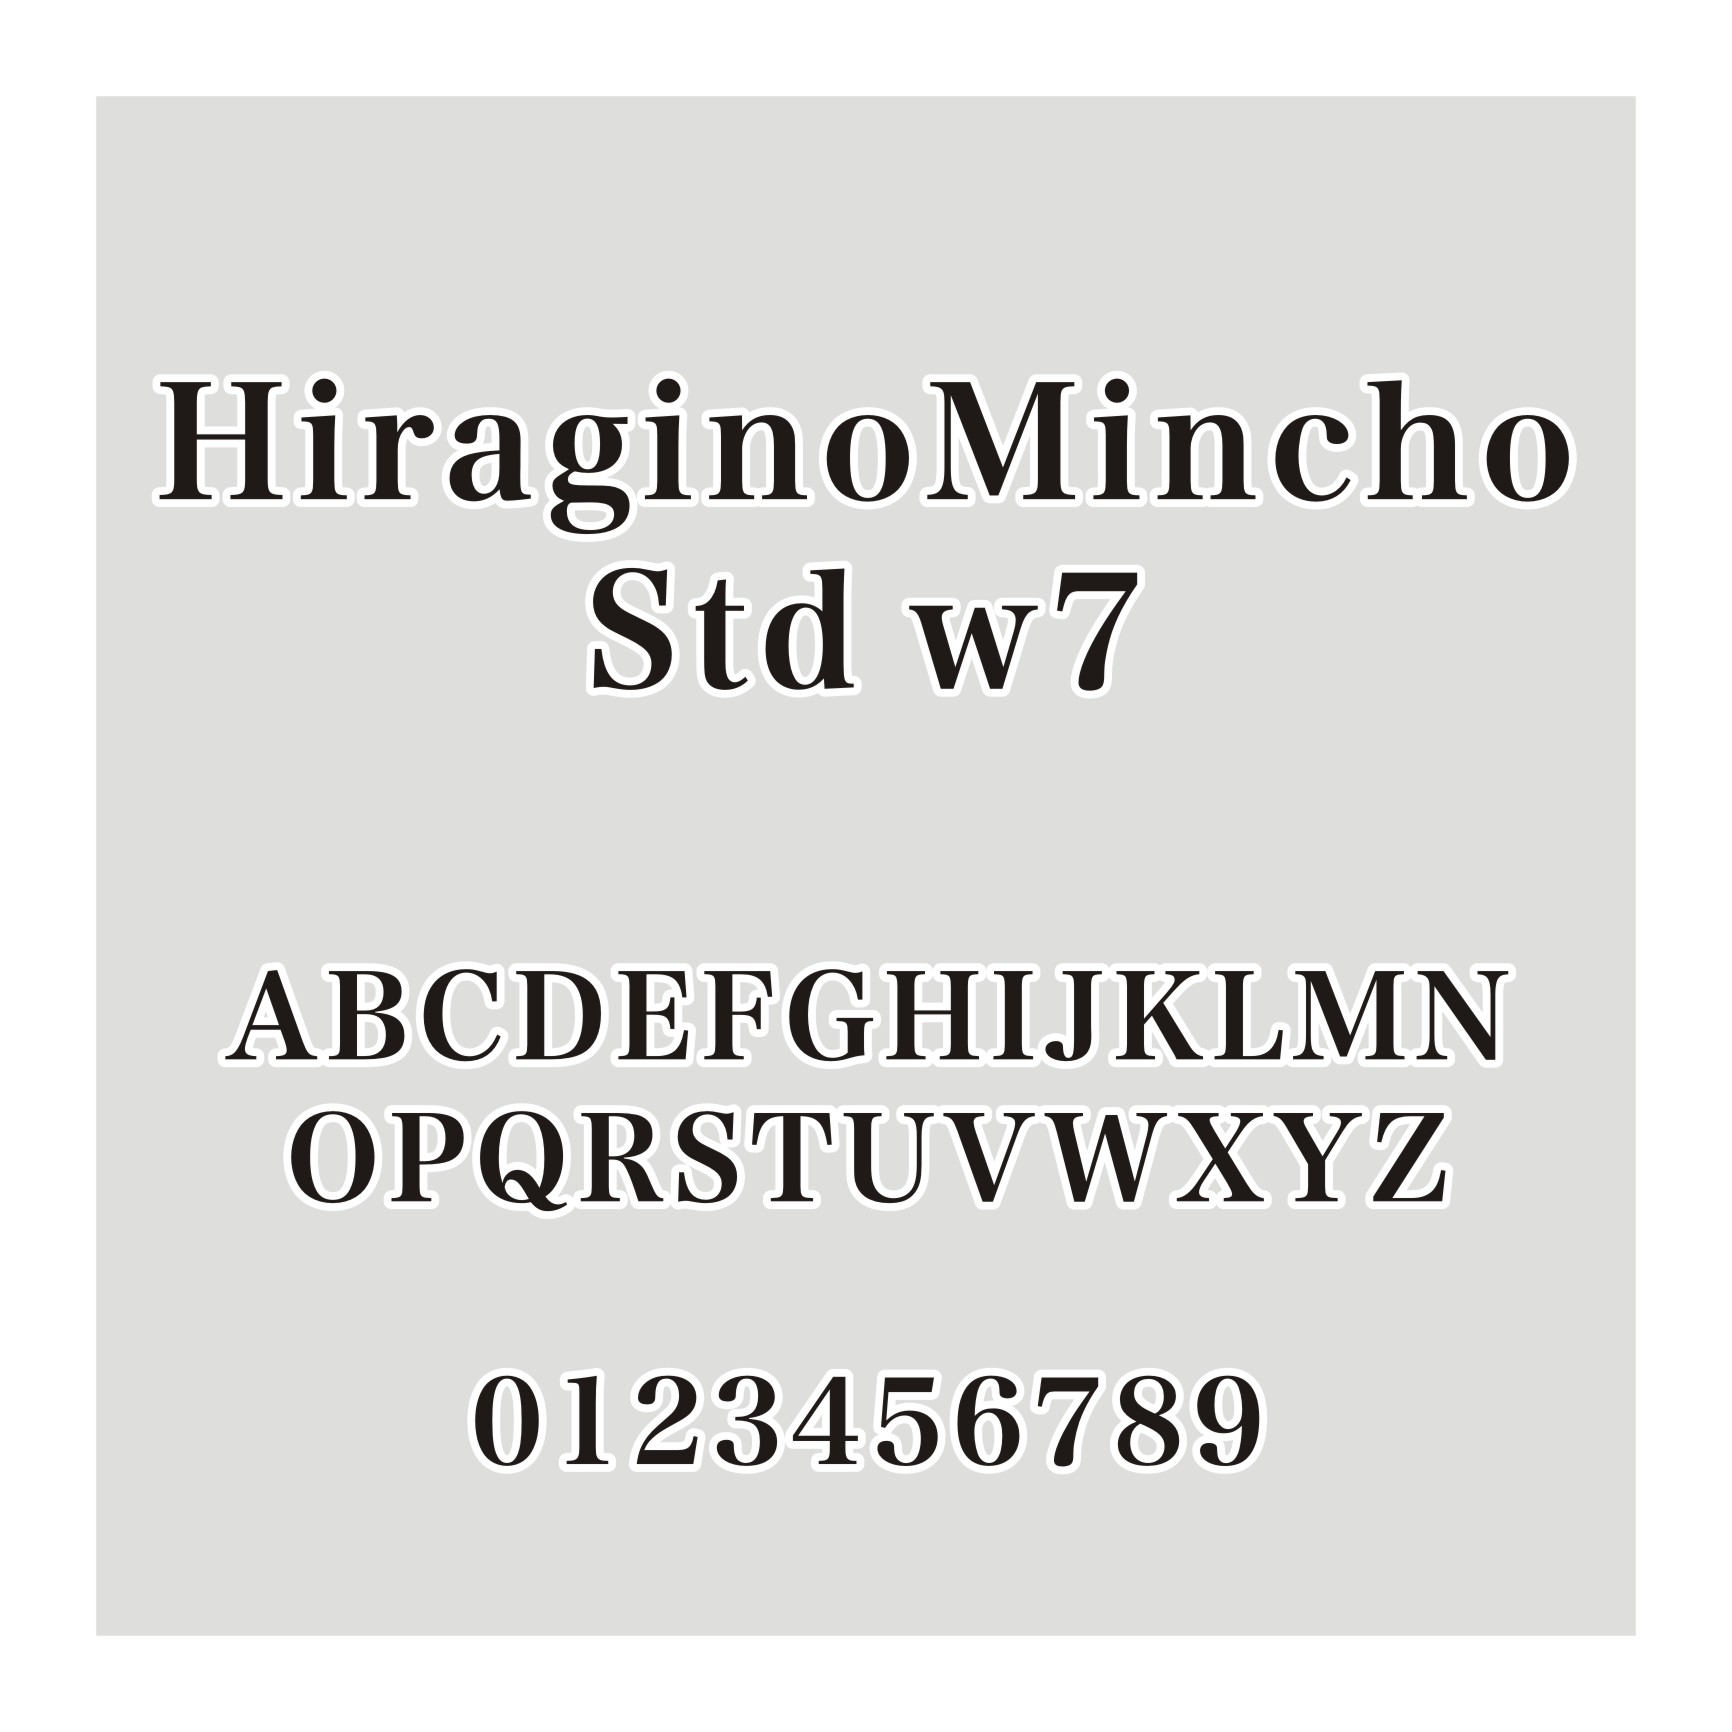 Hiragino Mincho Std W7